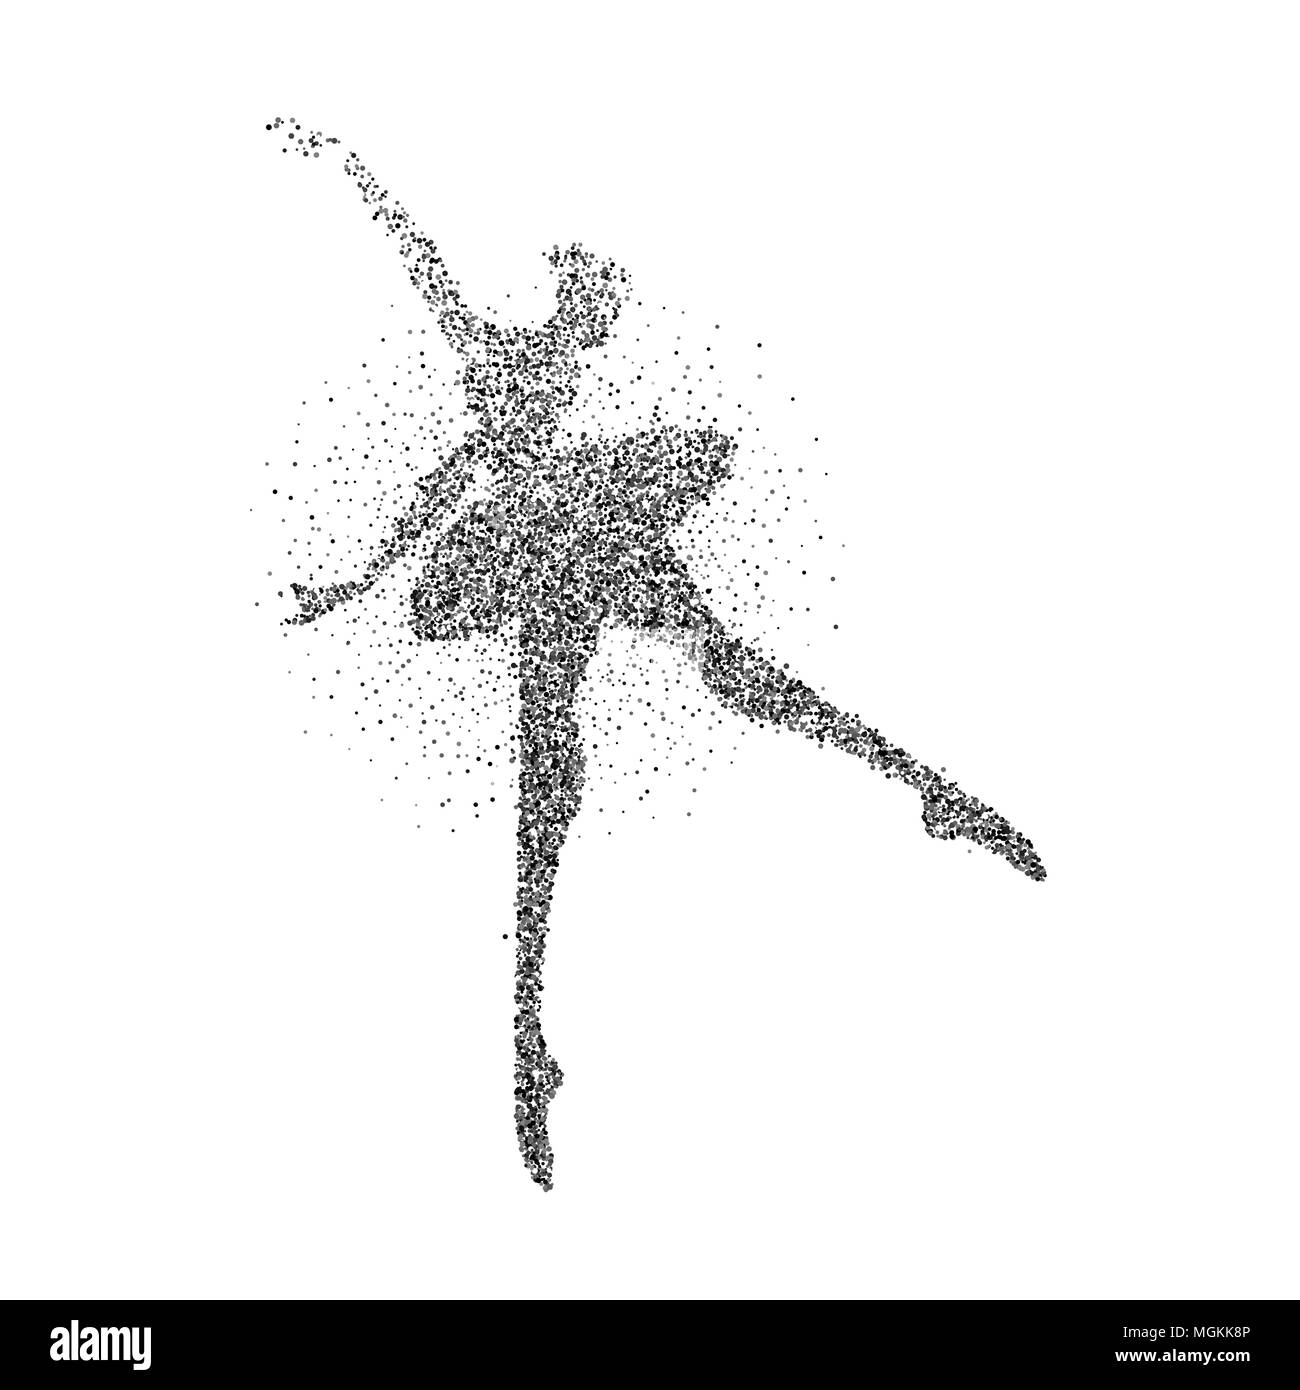 Dance Pose 1 Silhouette Graphic by Cove703 · Creative Fabrica